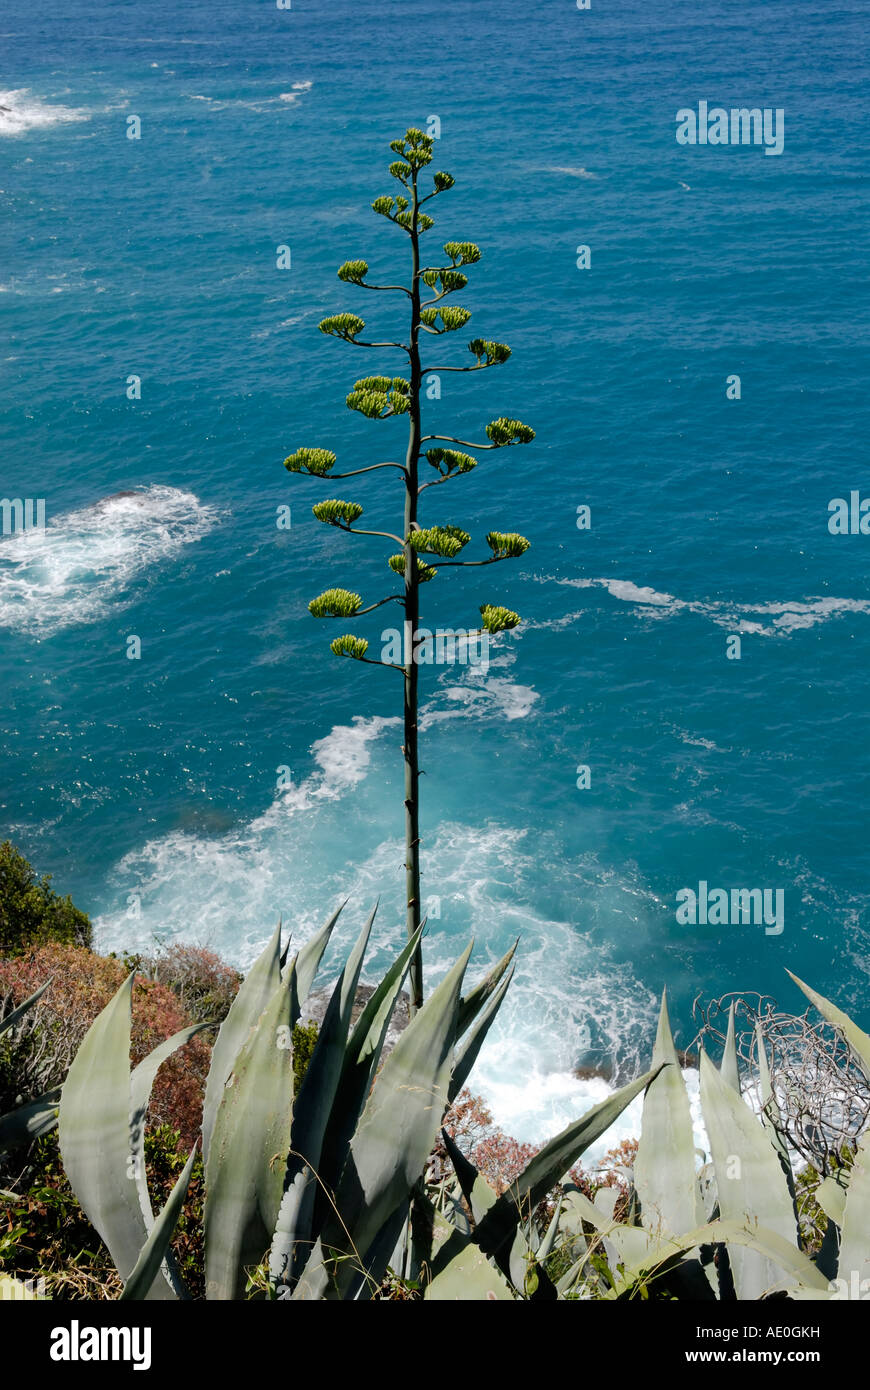 Agave americana Century Plant along the coast of the Ligurian Sea Italy Stock Photo